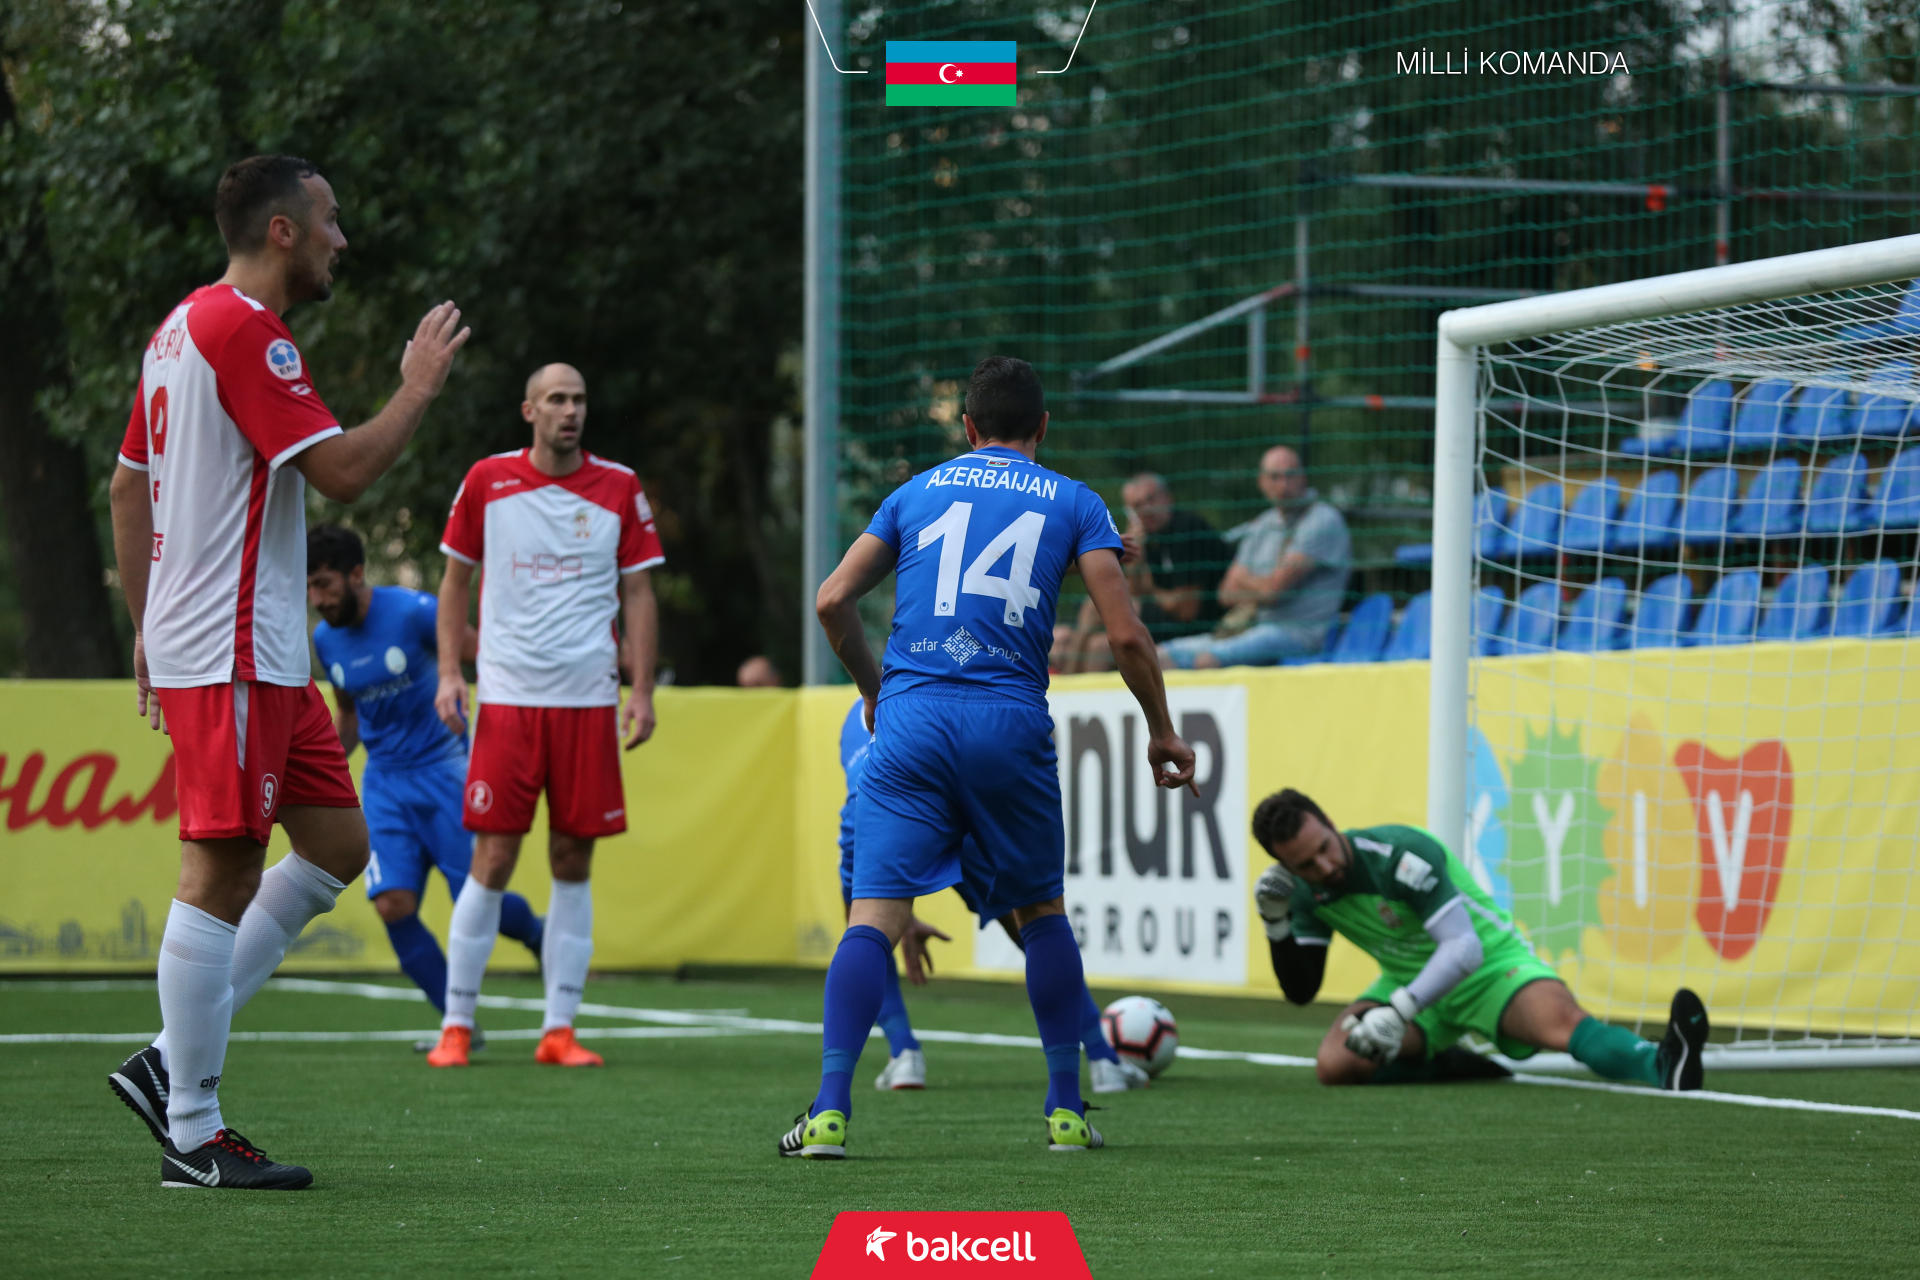 Сборная Азербайджана завершила свое участие в ЧЕ по мини-футболу (ФОТО)